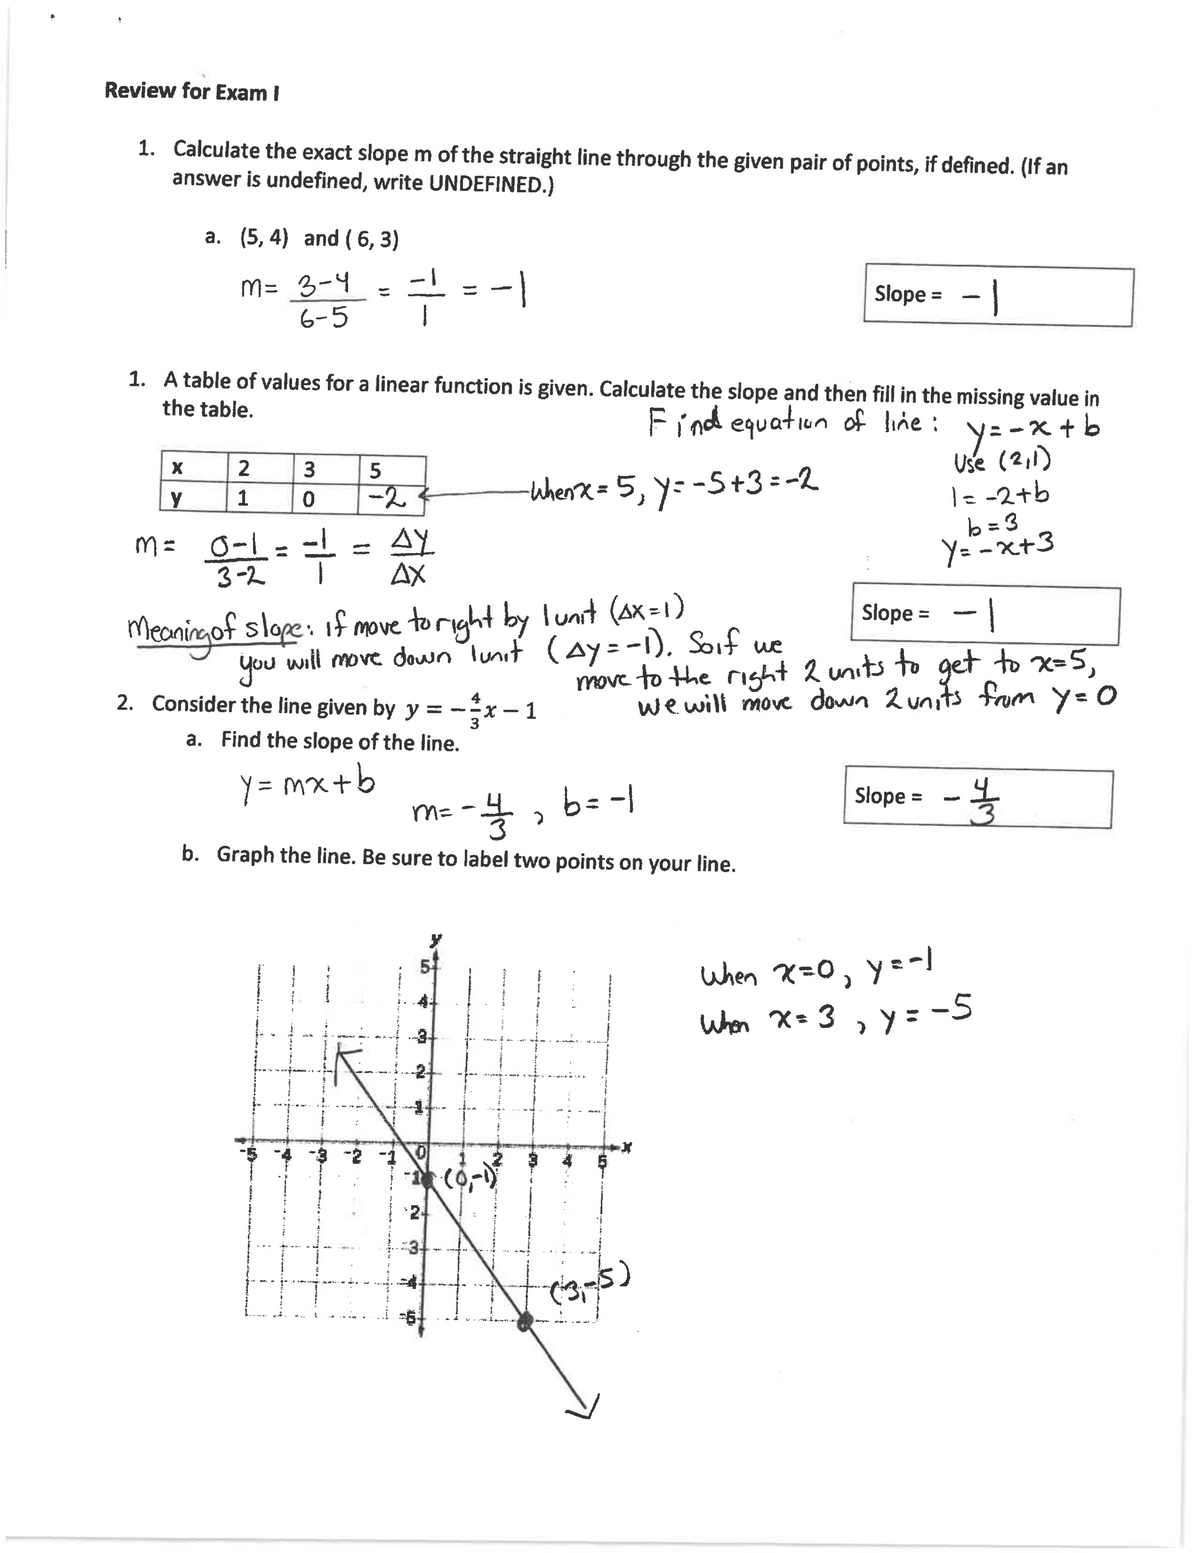 NKU MAT 114 Exam I Review Solutions - MAT 114 - StuDocu